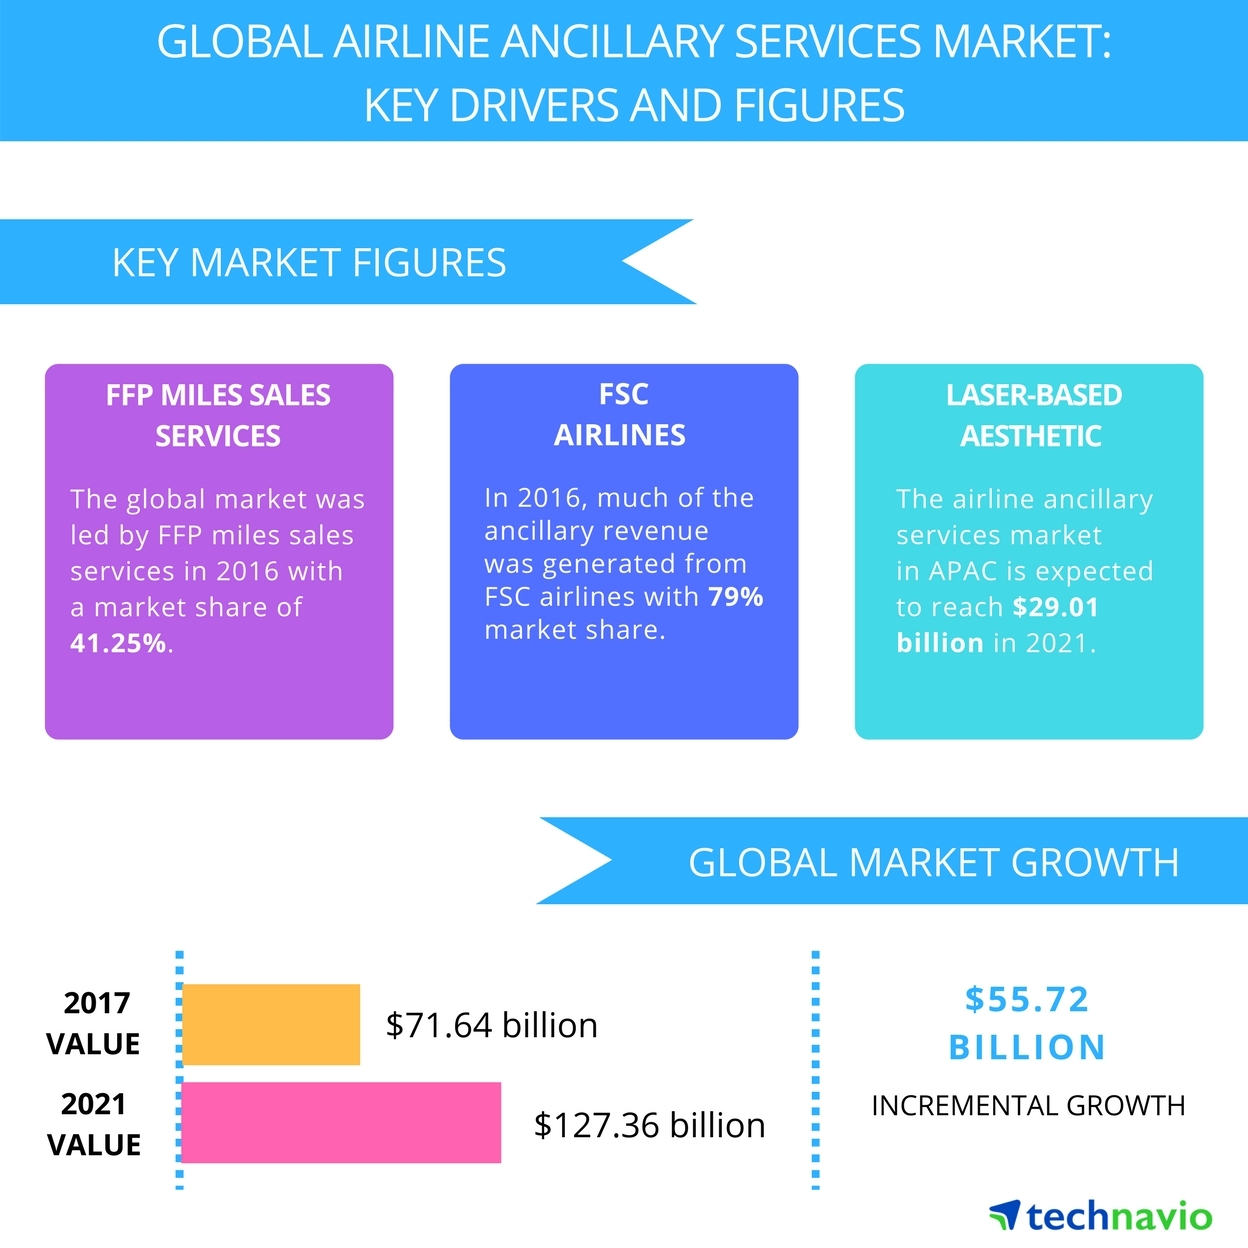 https://mms.businesswire.com/media/20170322006015/en/576952/5/Global_Airline_Ancillary_Services_Market.jpg